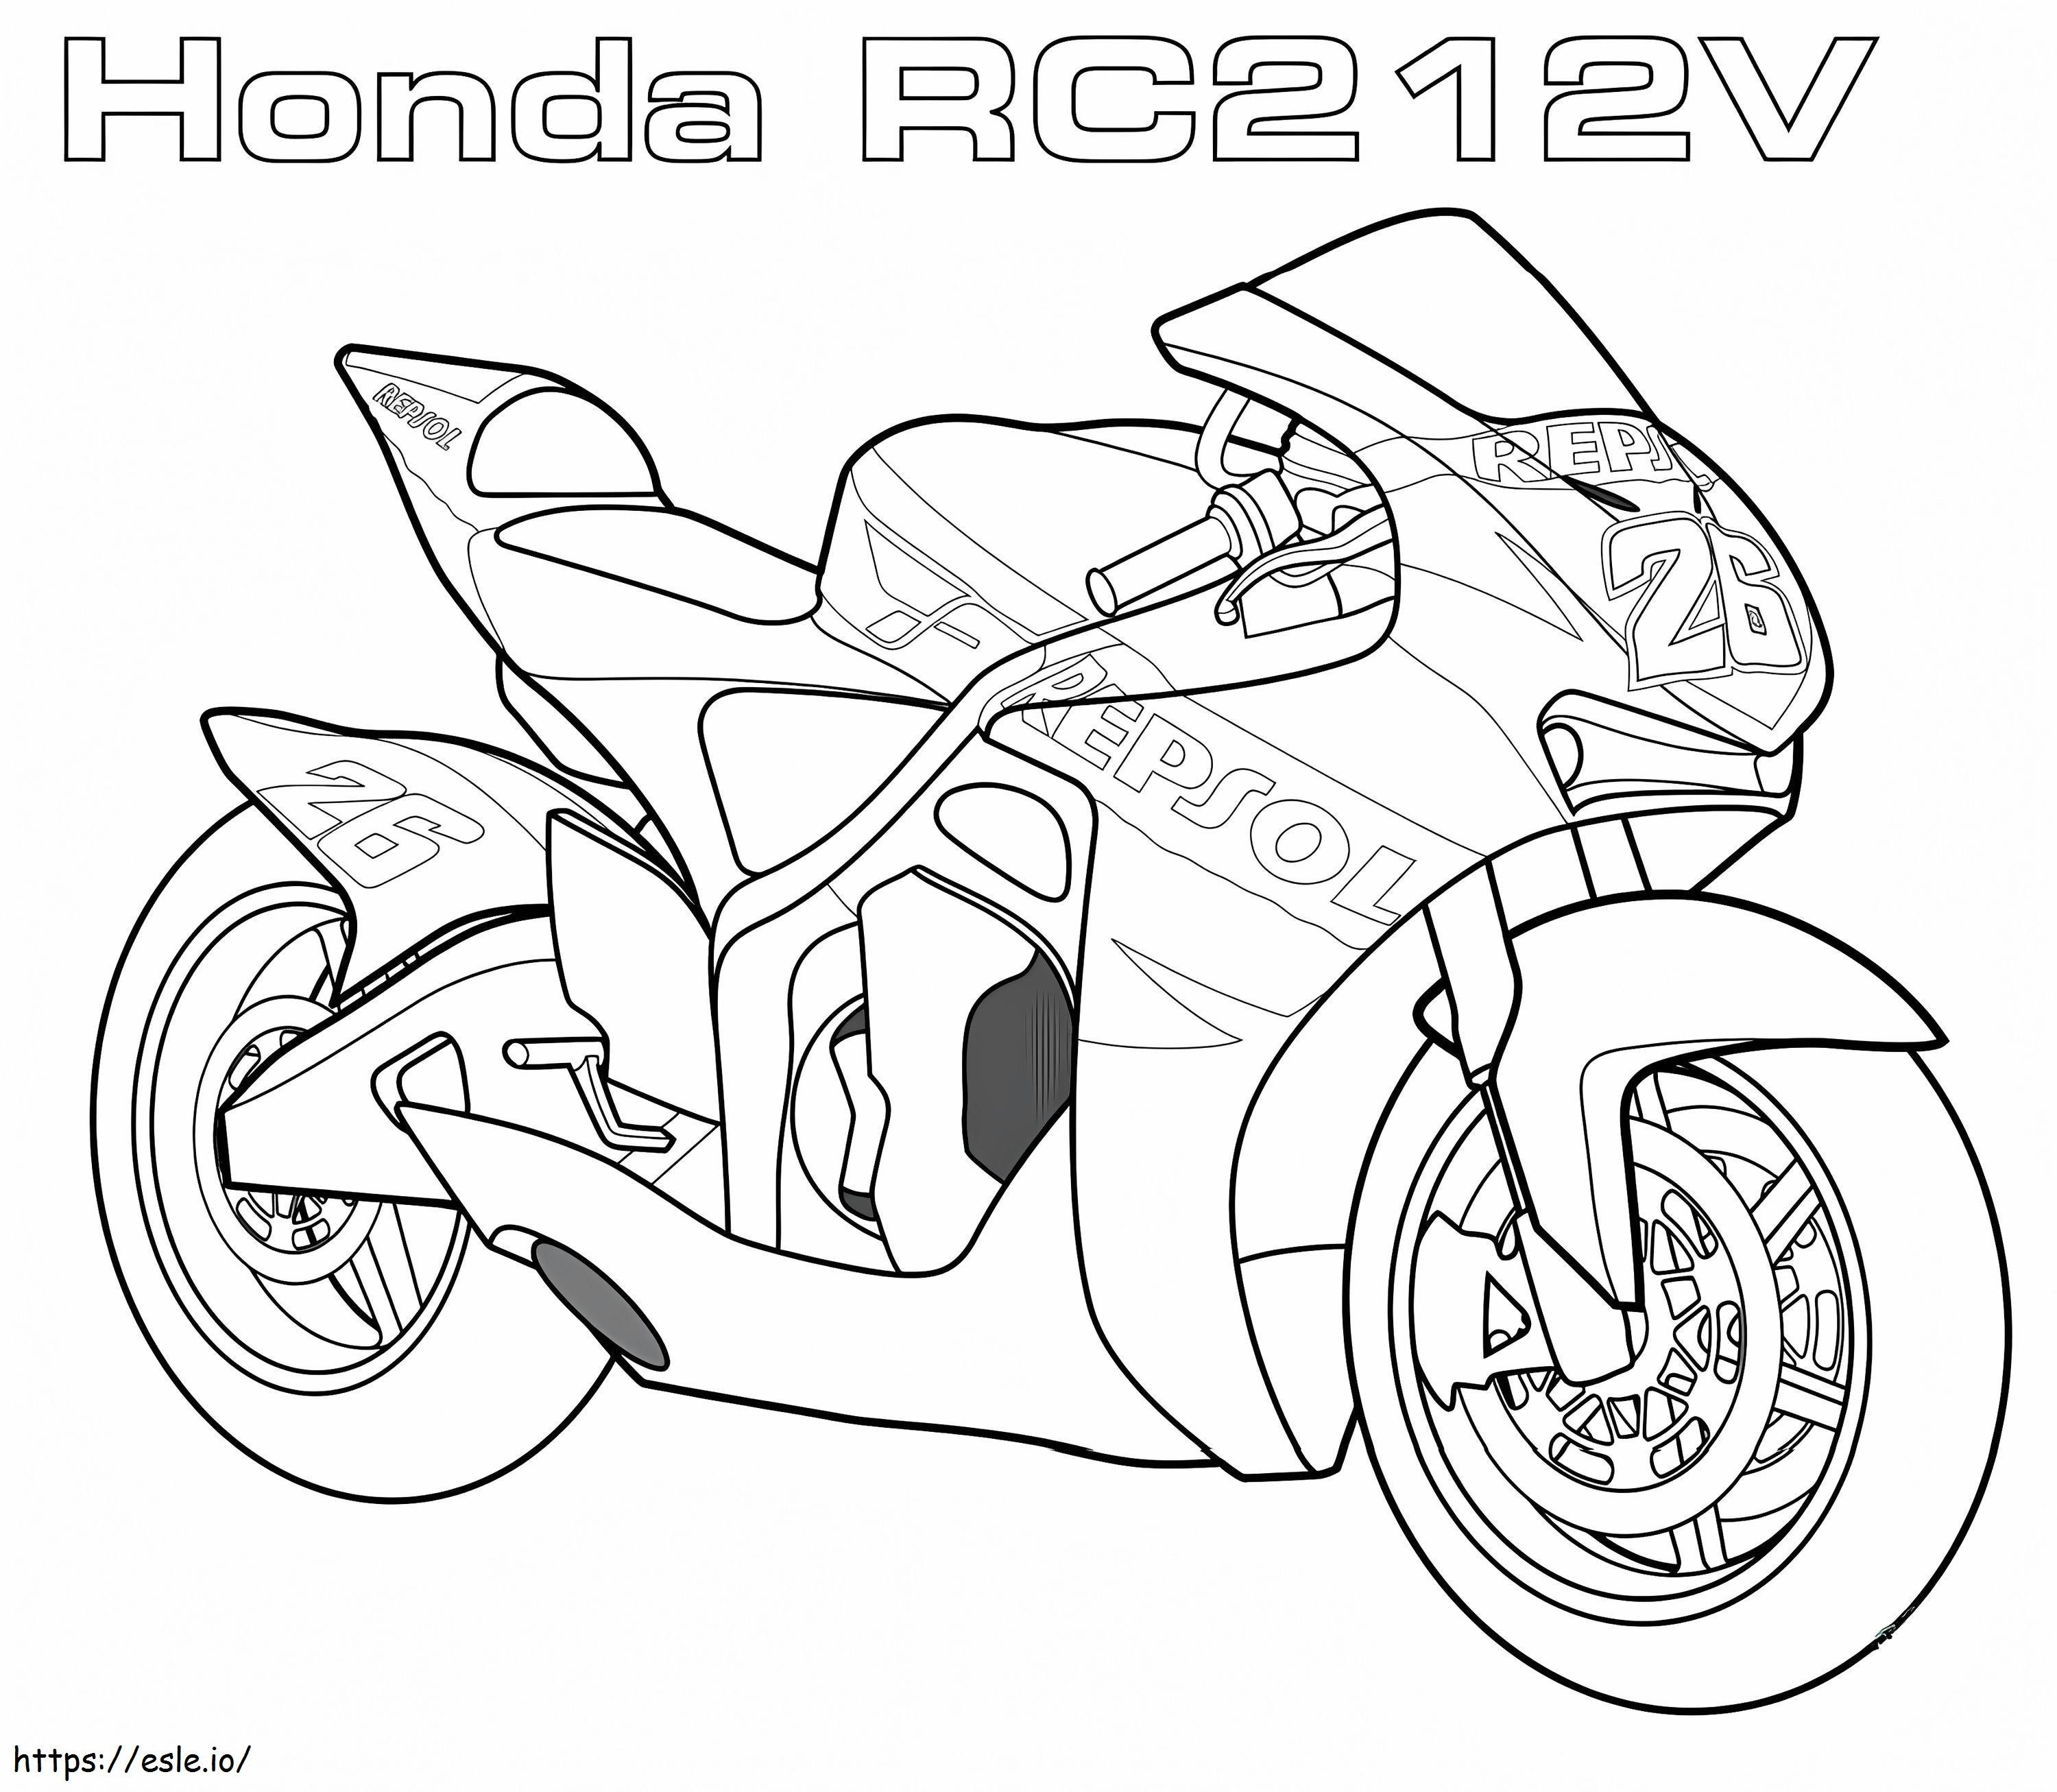 1560590239 Honda RC2 V12 A4 da colorare